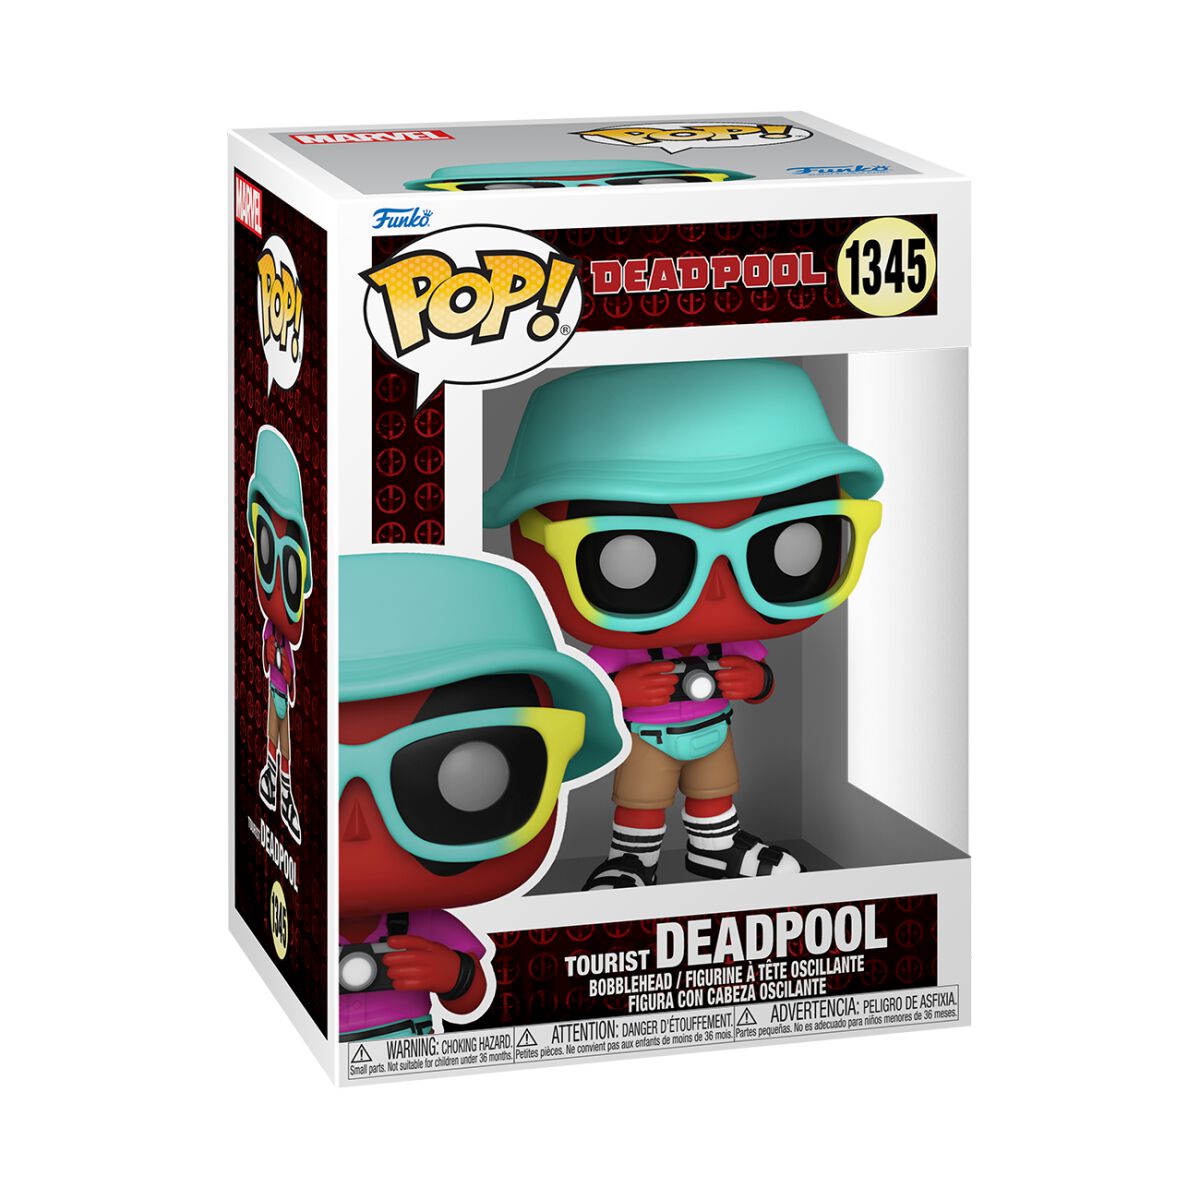 Deadpool - Tourist Deadpool Vinyl Figur 1345 - Funko Pop! Figur - Funko Shop Deutschland - Lizenzierter Fanartikel